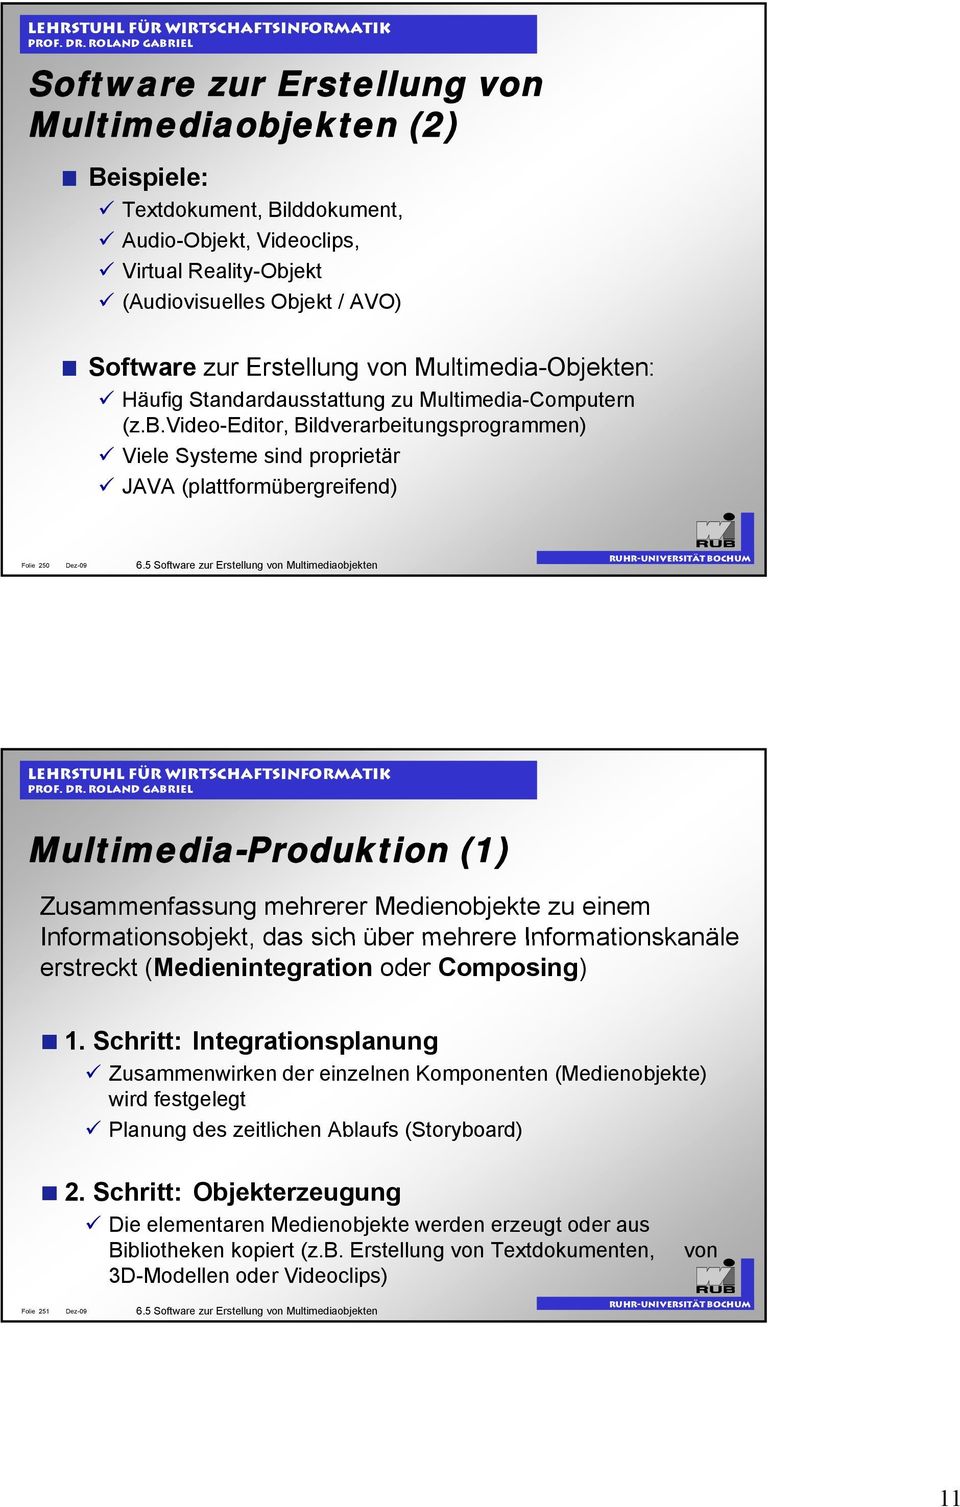 ekten: Häufig Standardausstattung zu Multimedia-Computern (z.b.